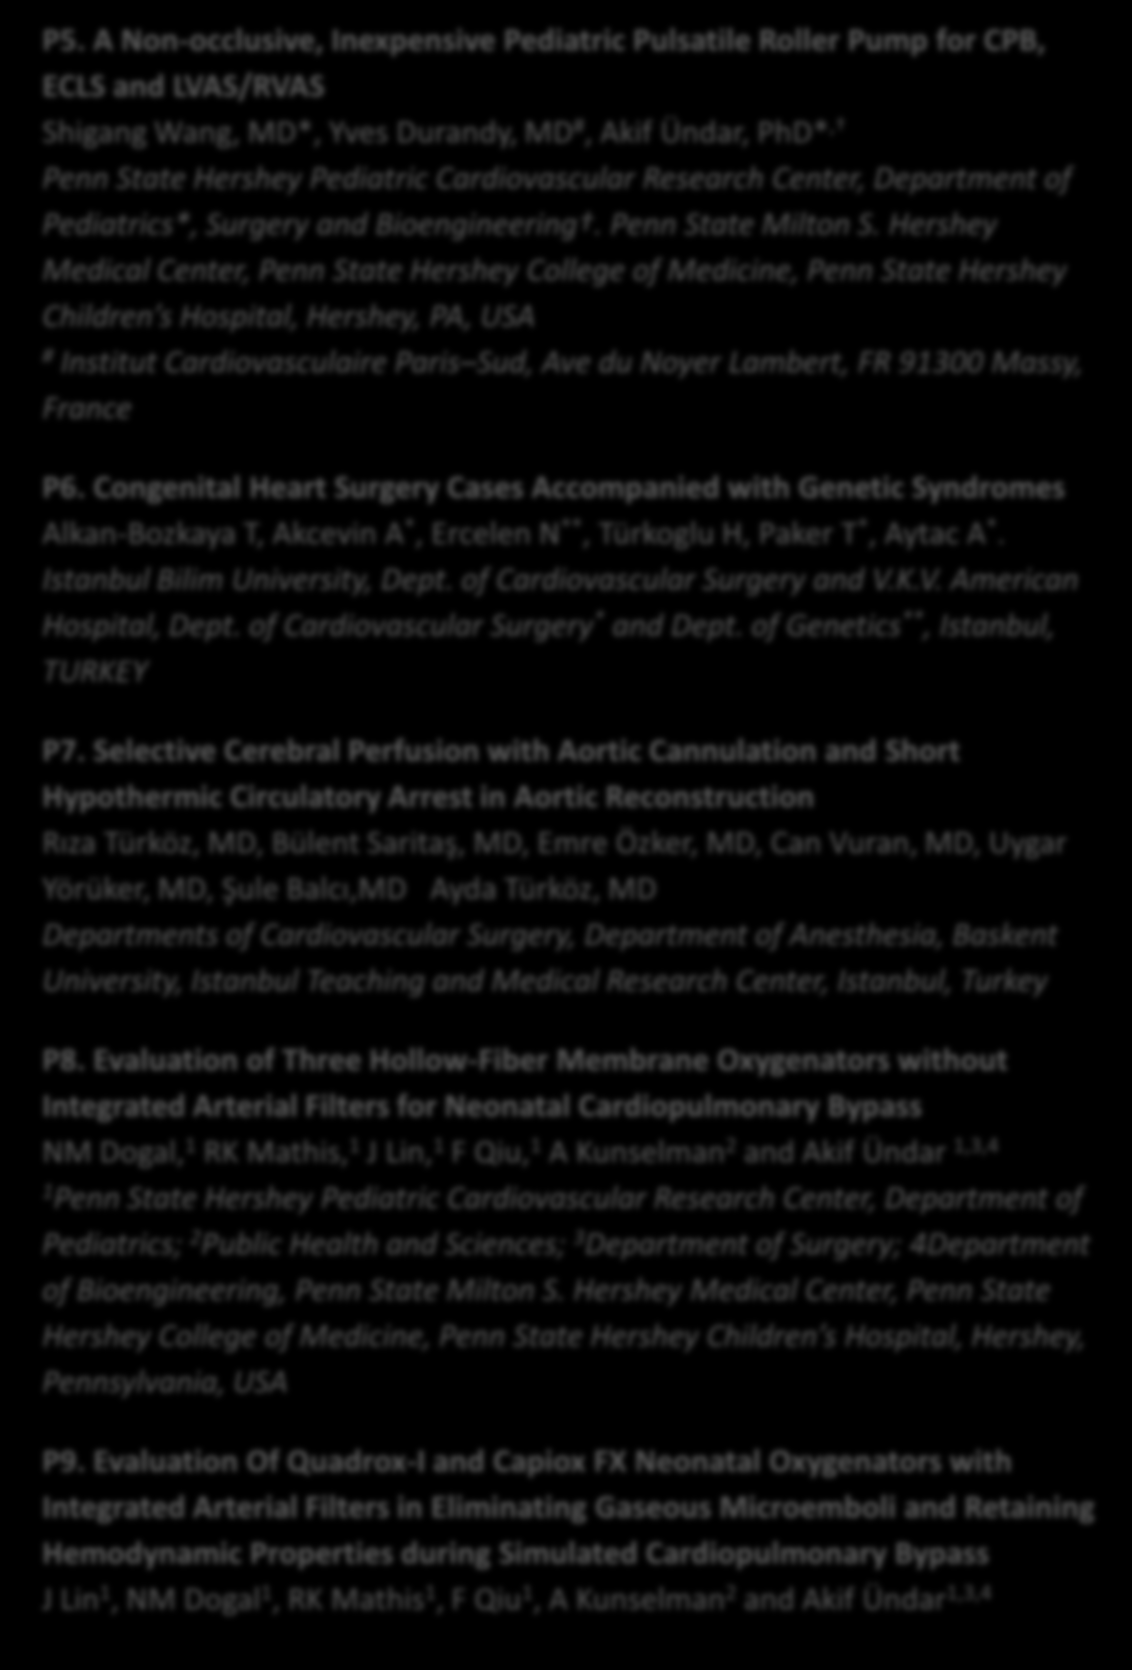 P5. A Non-occlusive, Inexpensive Pediatric Pulsatile Roller Pump for CPB, ECLS and LVAS/RVAS Shigang Wang, MD*, Yves Durandy, MD #, Akif Ündar, PhD*, Pediatrics*, Surgery and Bioengineering.